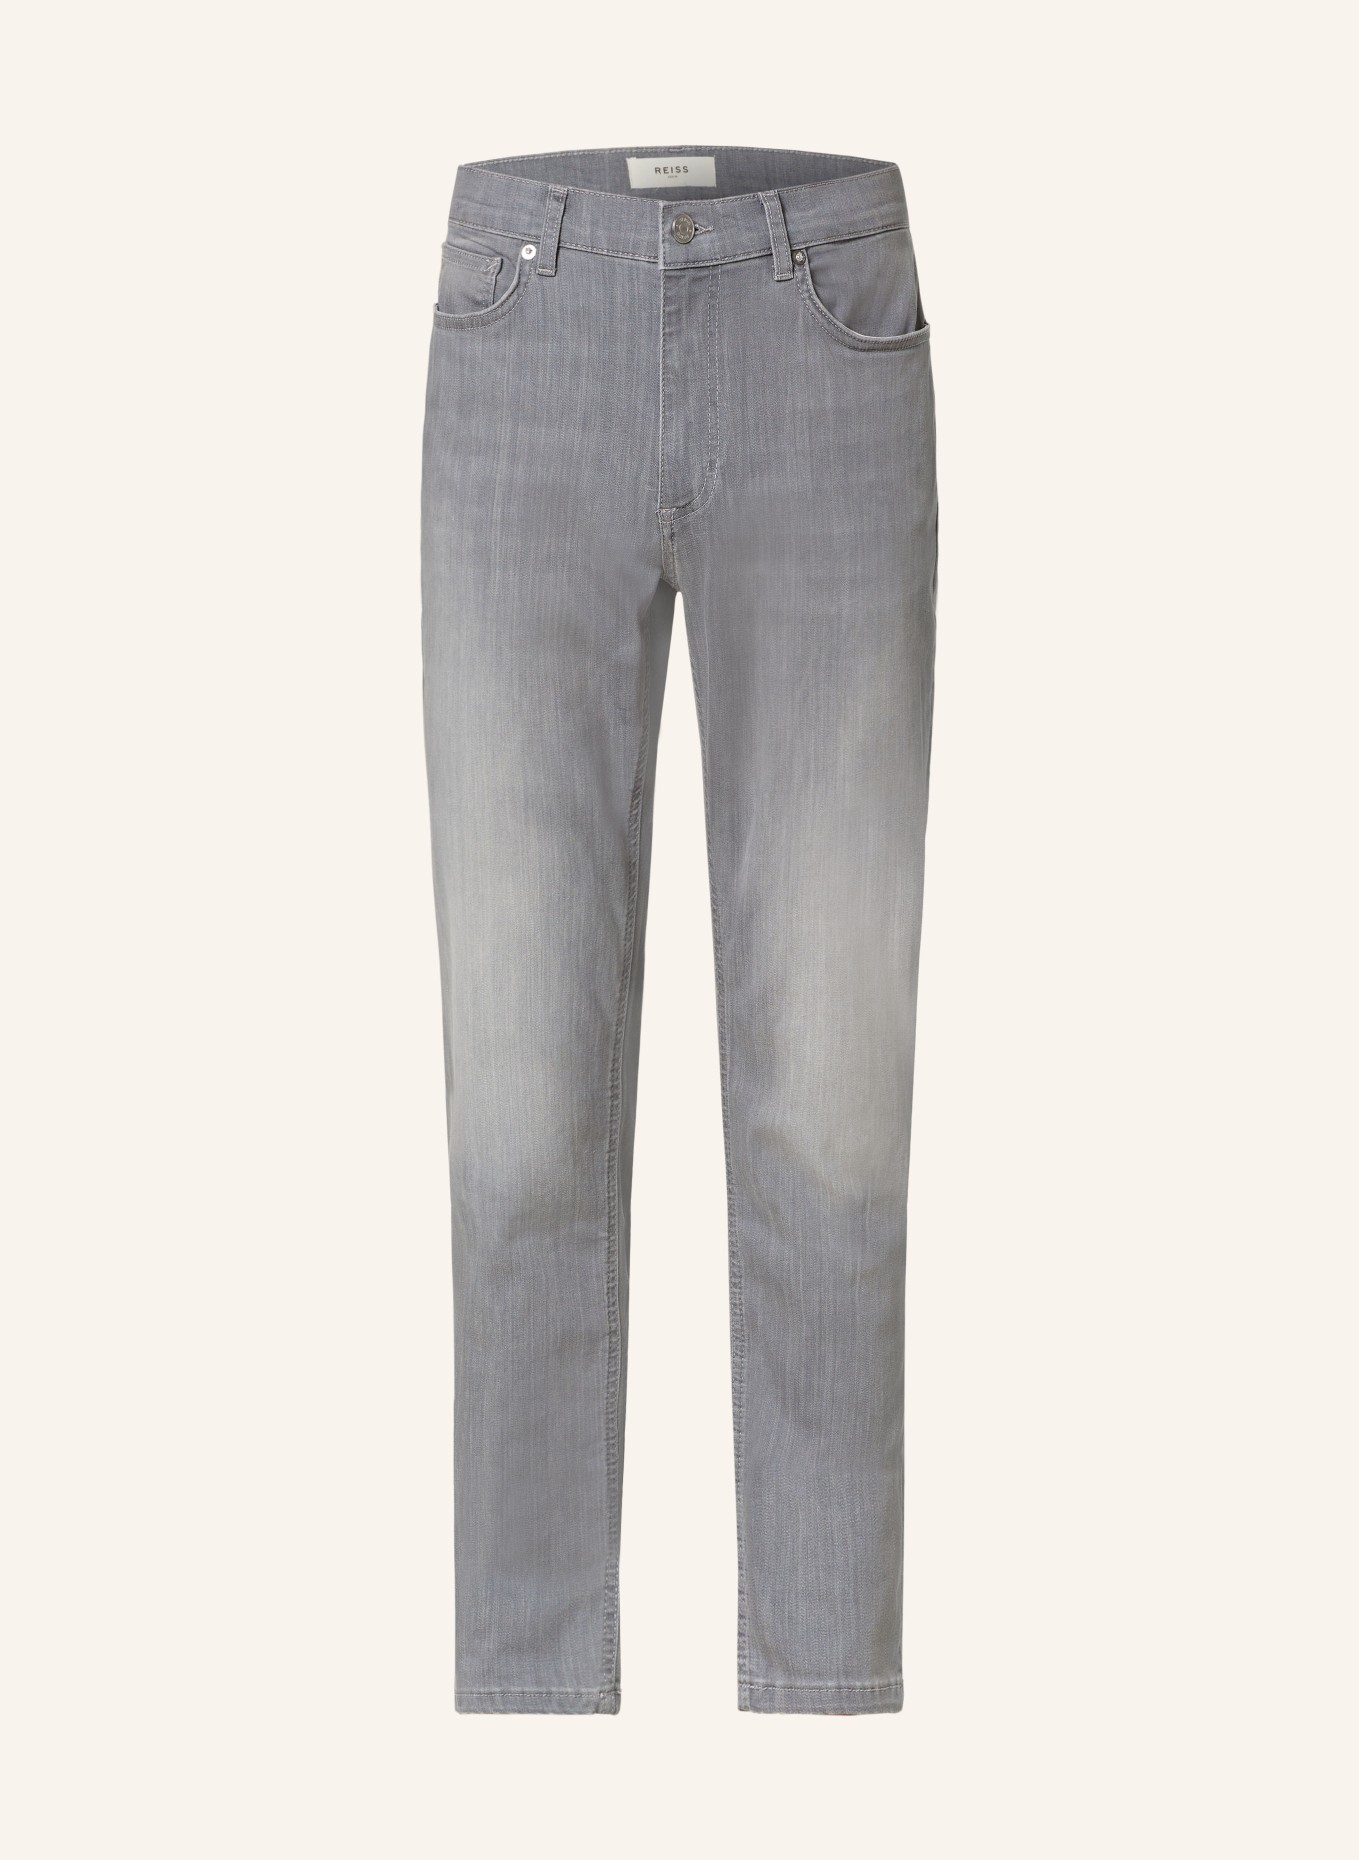 REISS Jeans HARRY Slim Fit, Farbe: GRAU (Bild 1)